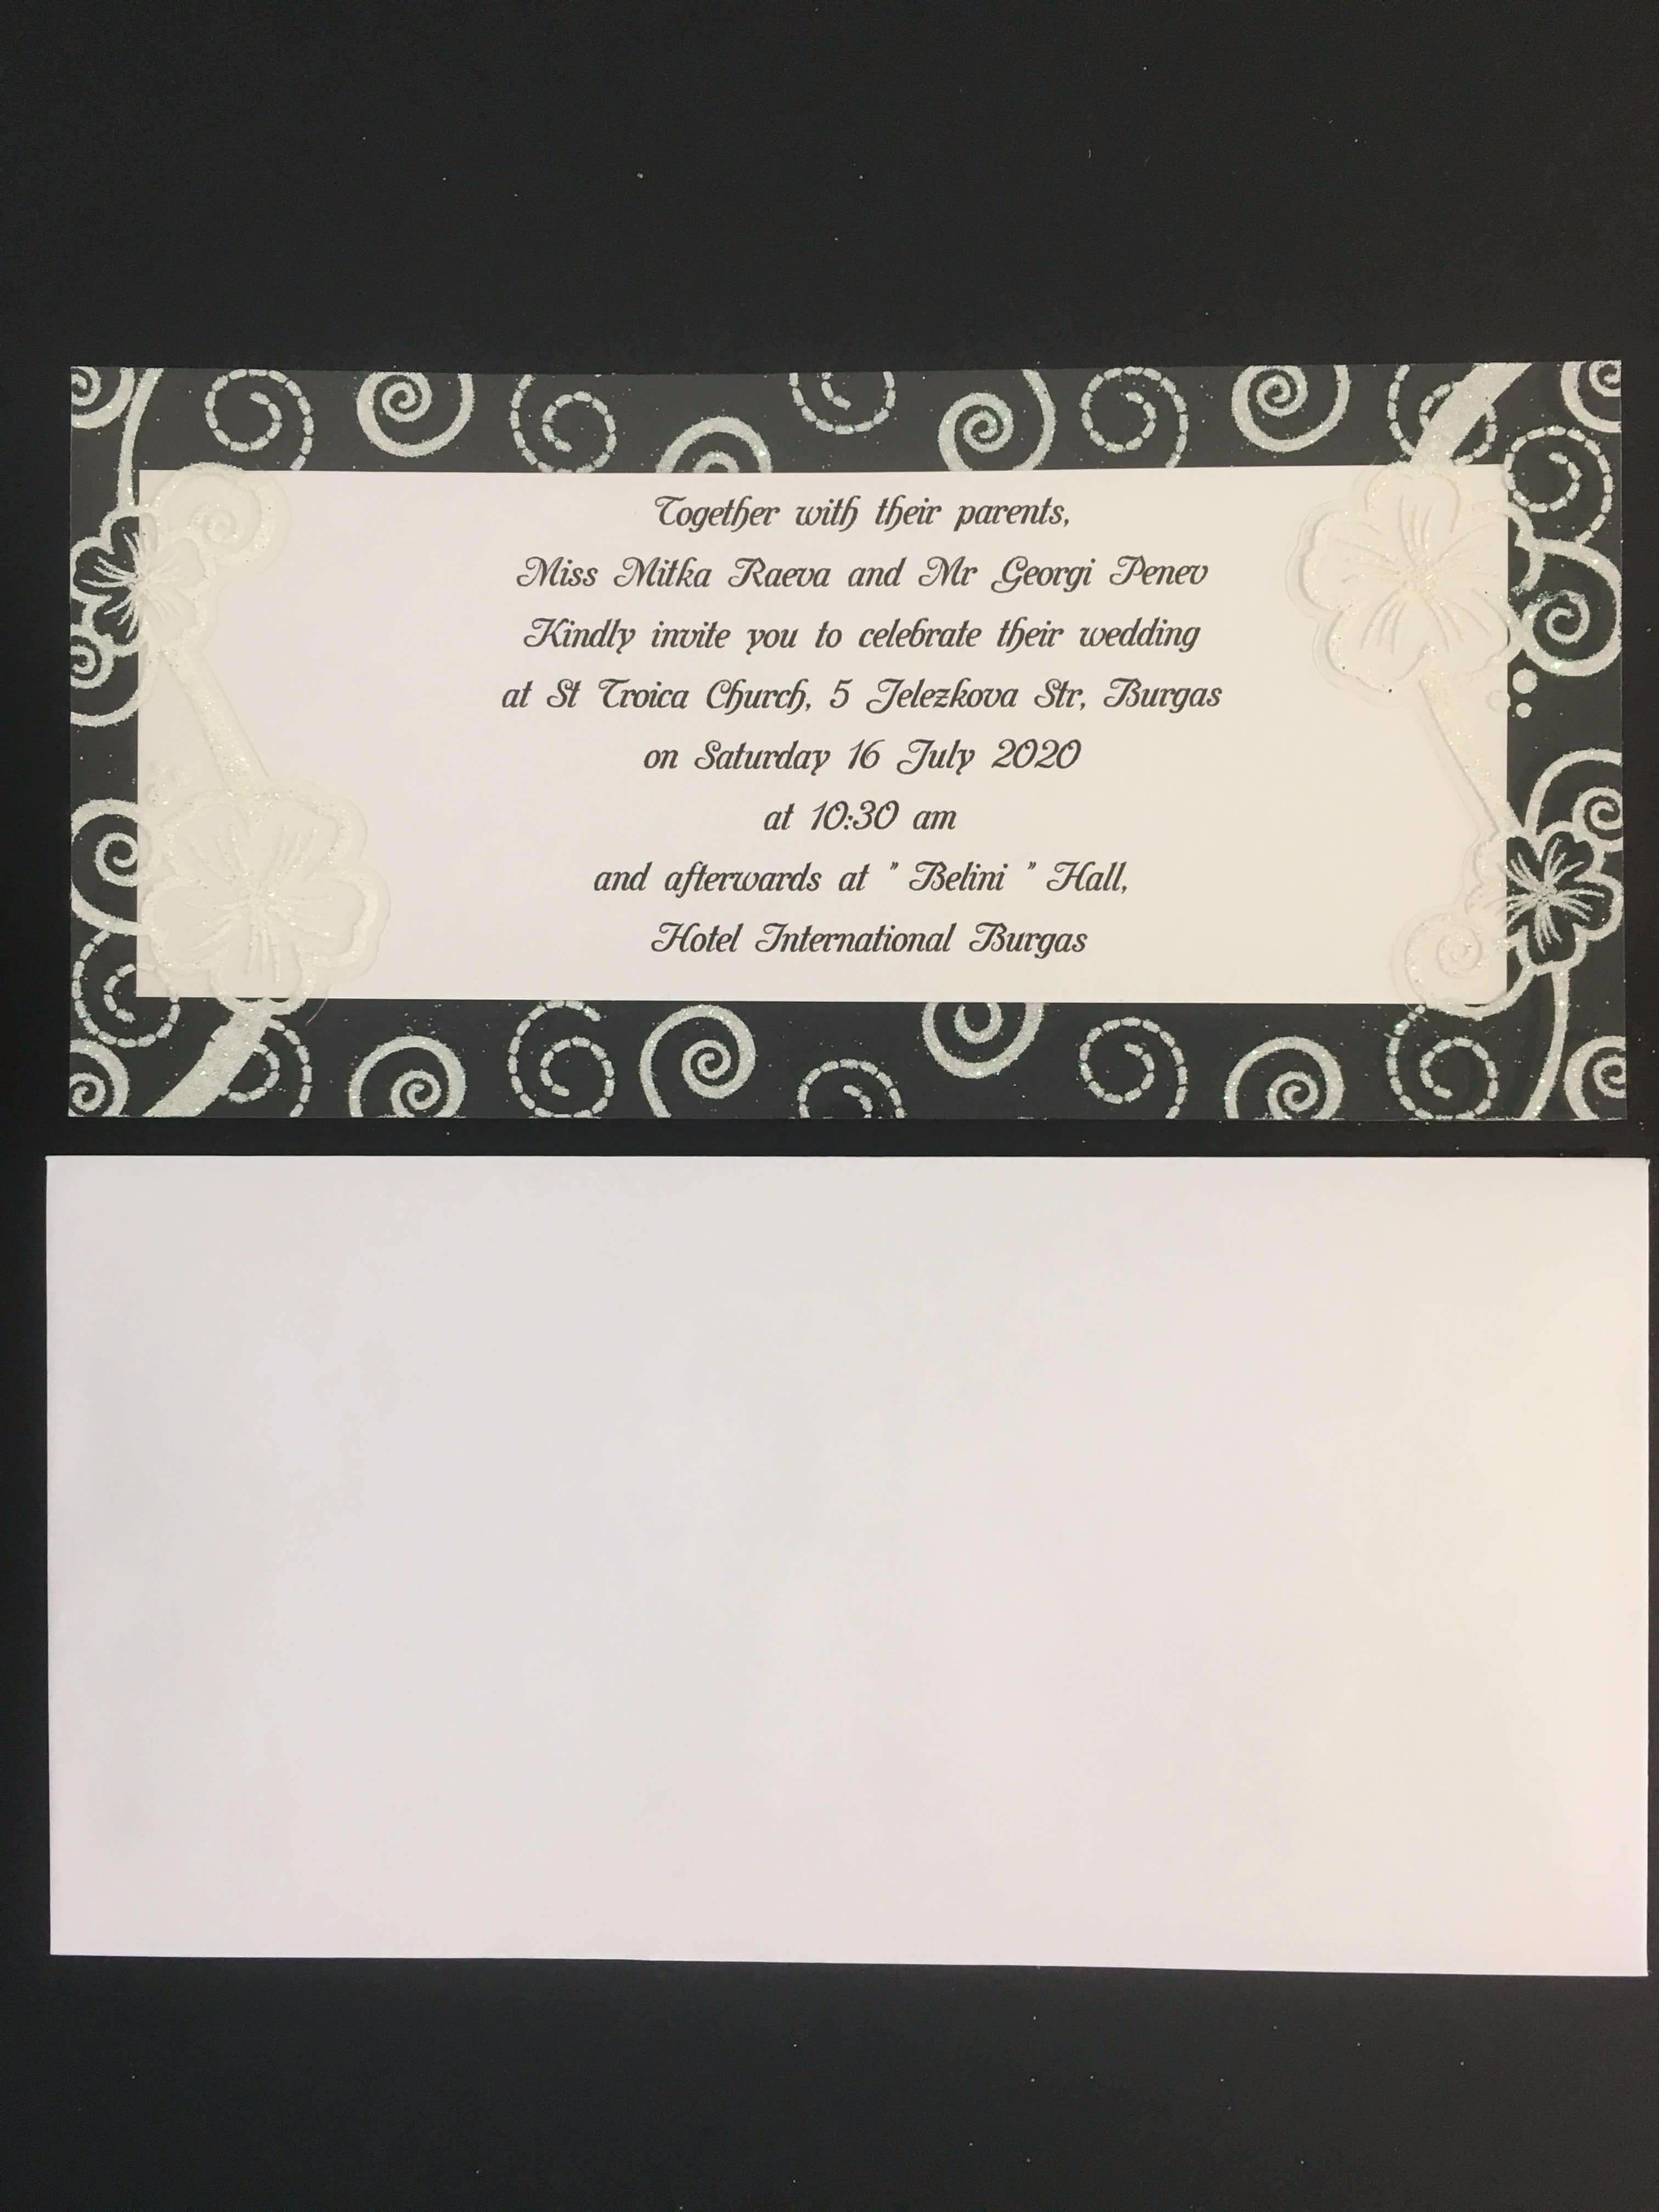 clear plastic wedding invitations